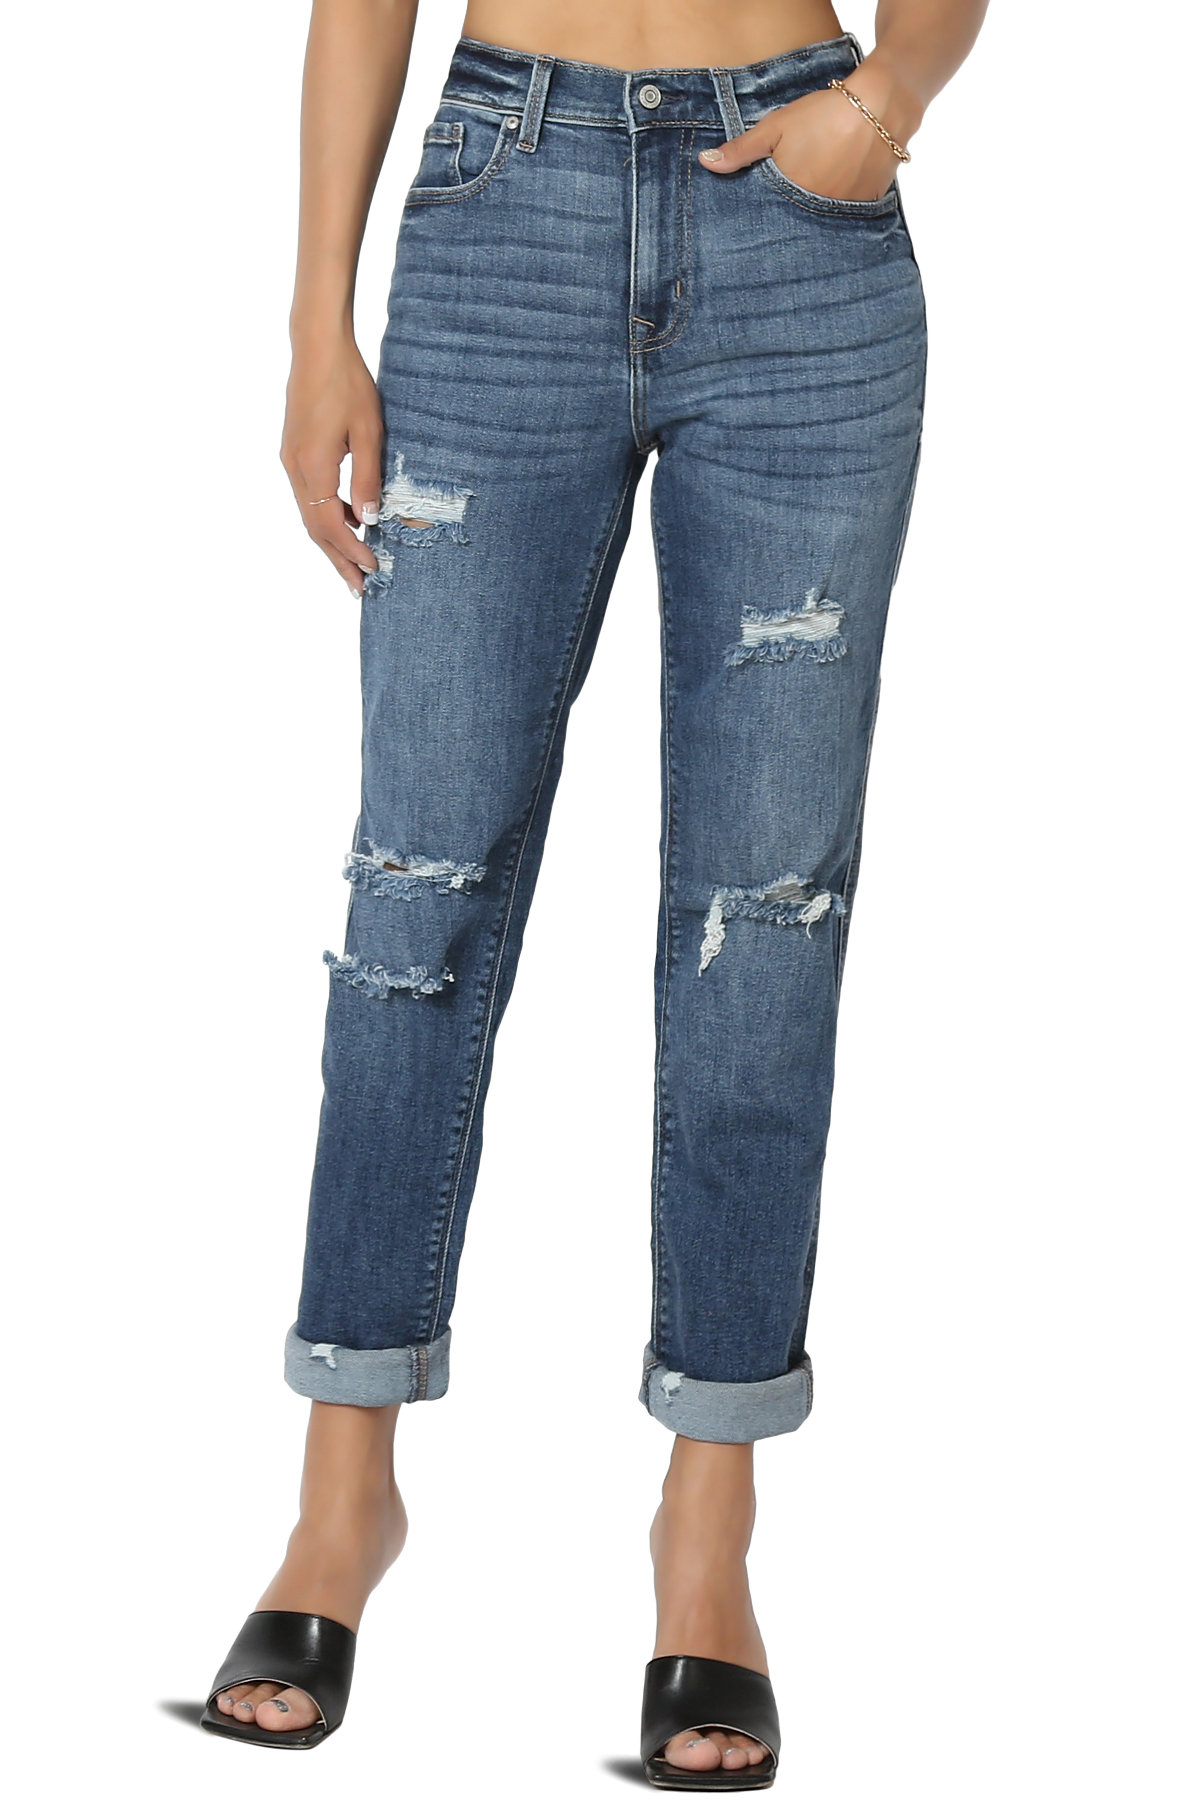 TheMogan Women's Dark Vintage Blue Wash Classic High Rise Stretch Denim Skinny Jeans - image 1 of 7